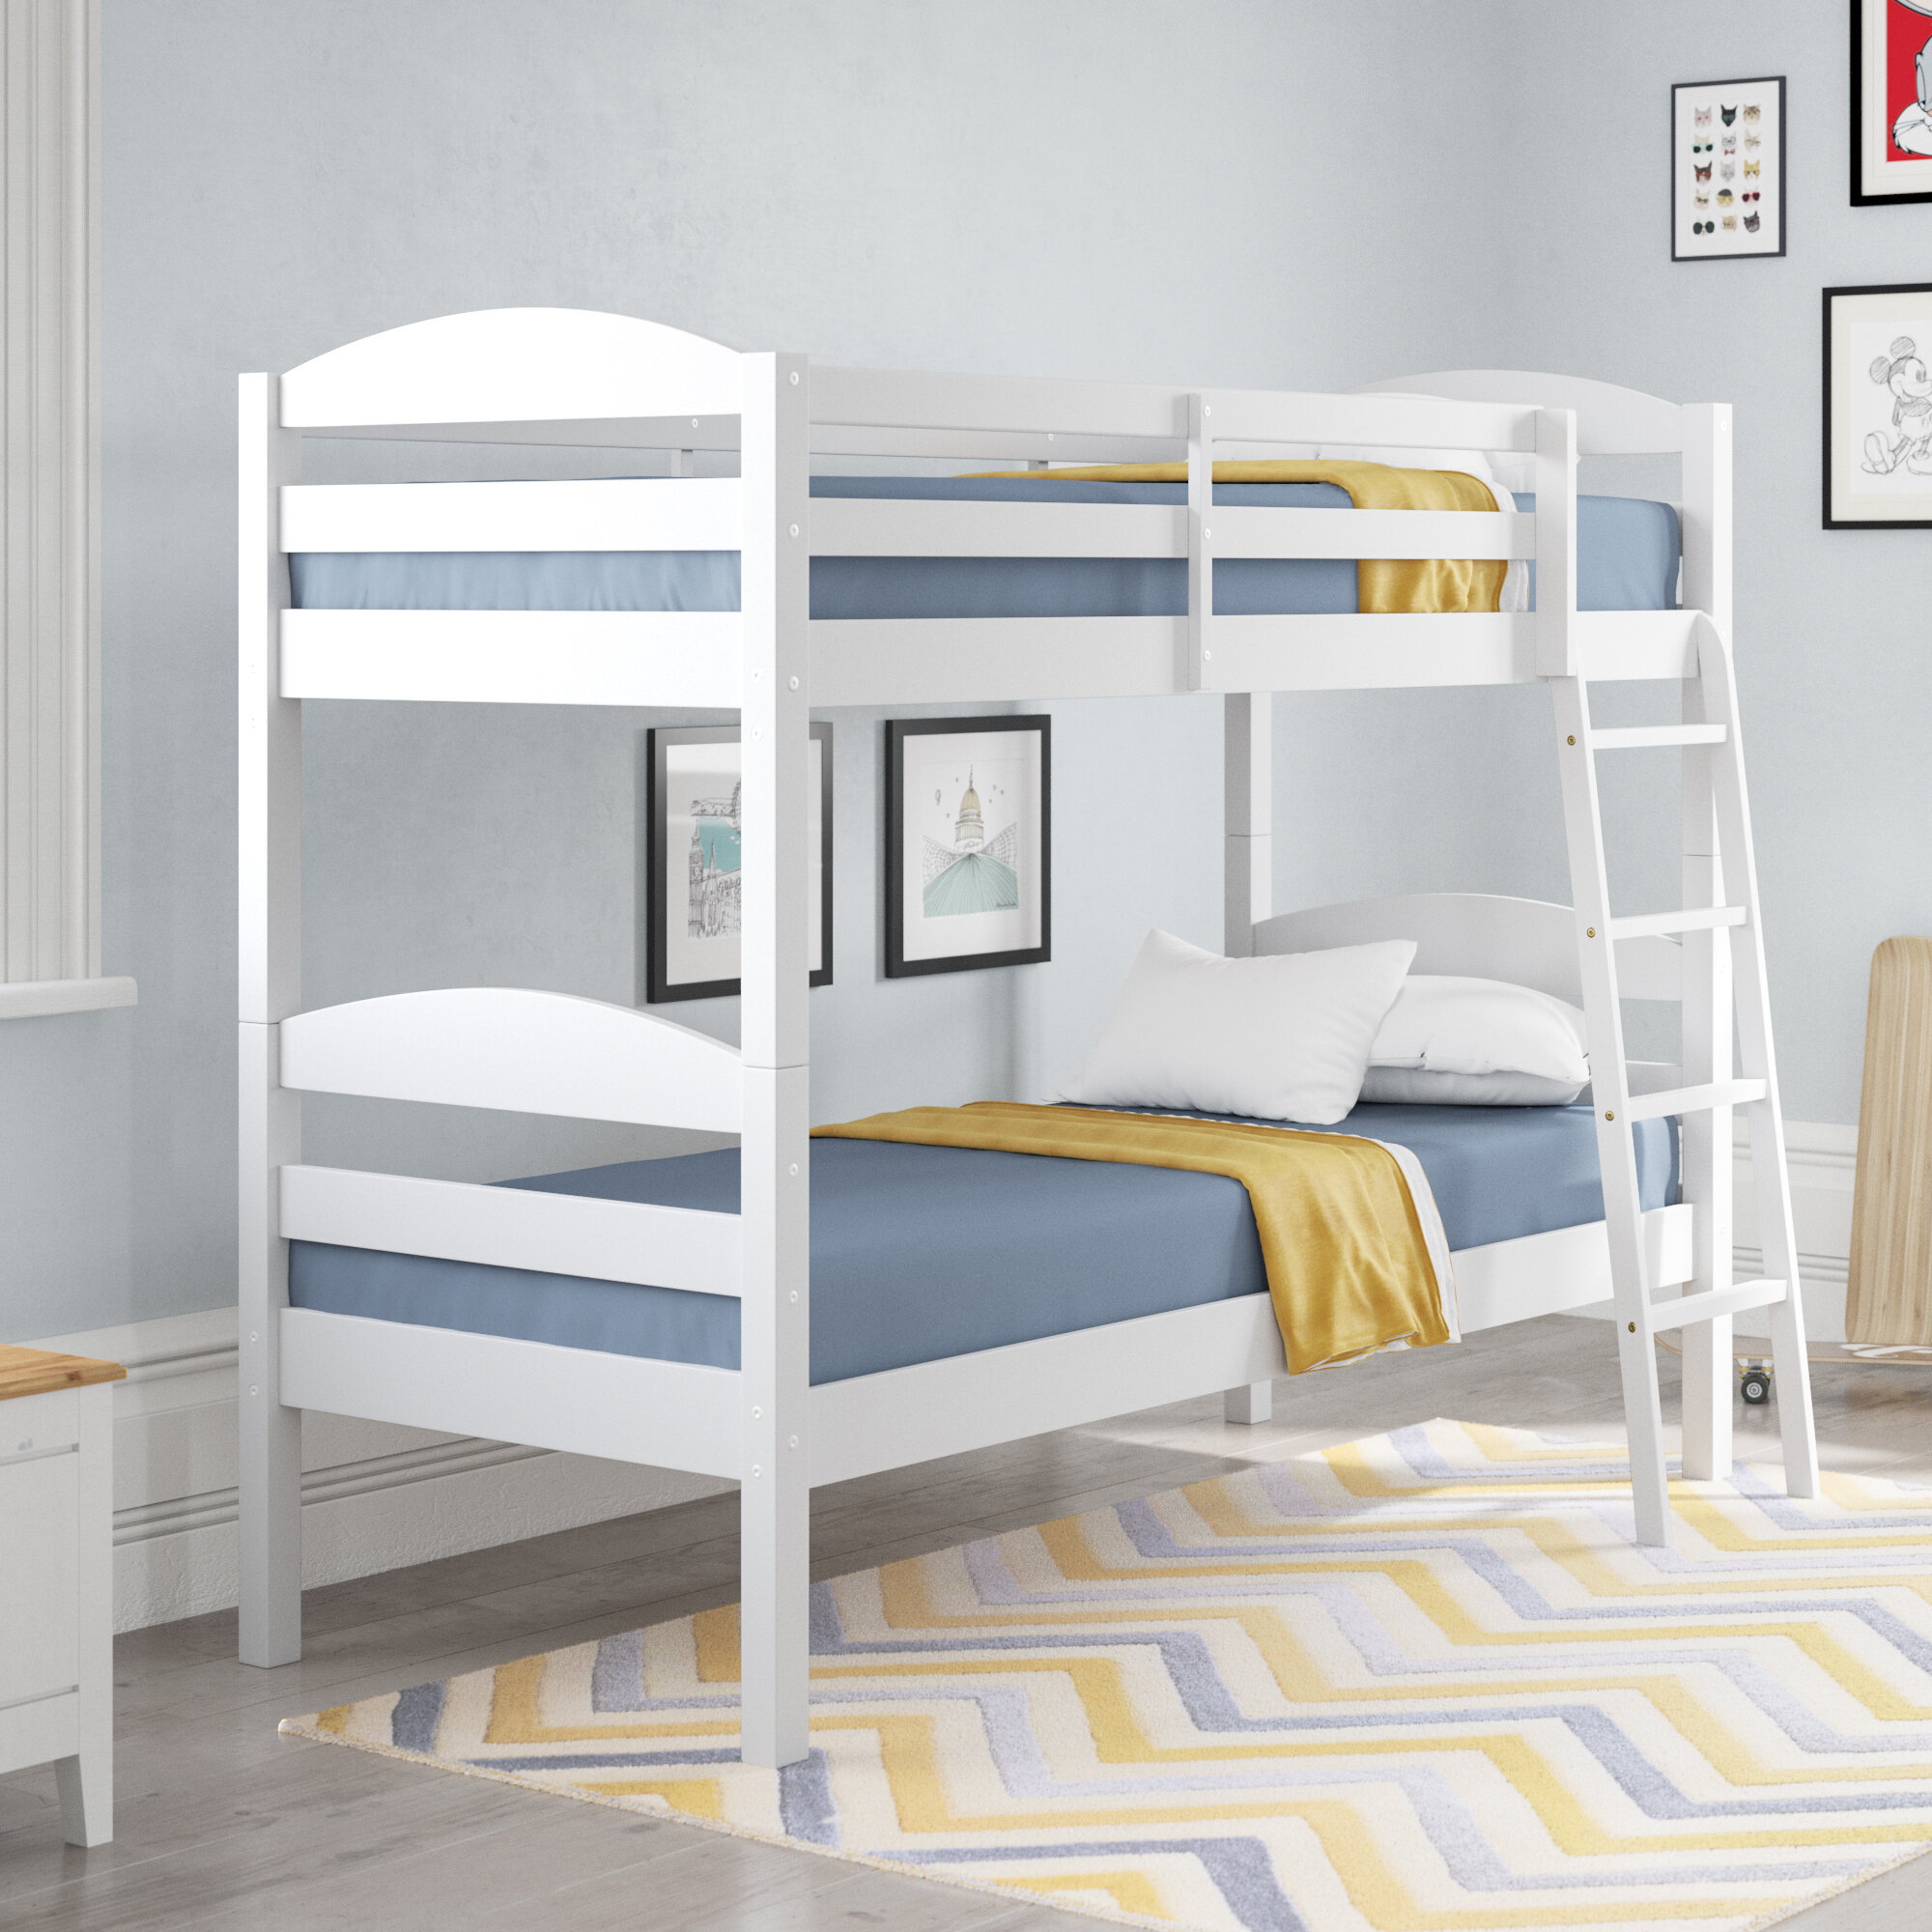 tupelo-single-bunk-bed.jpg